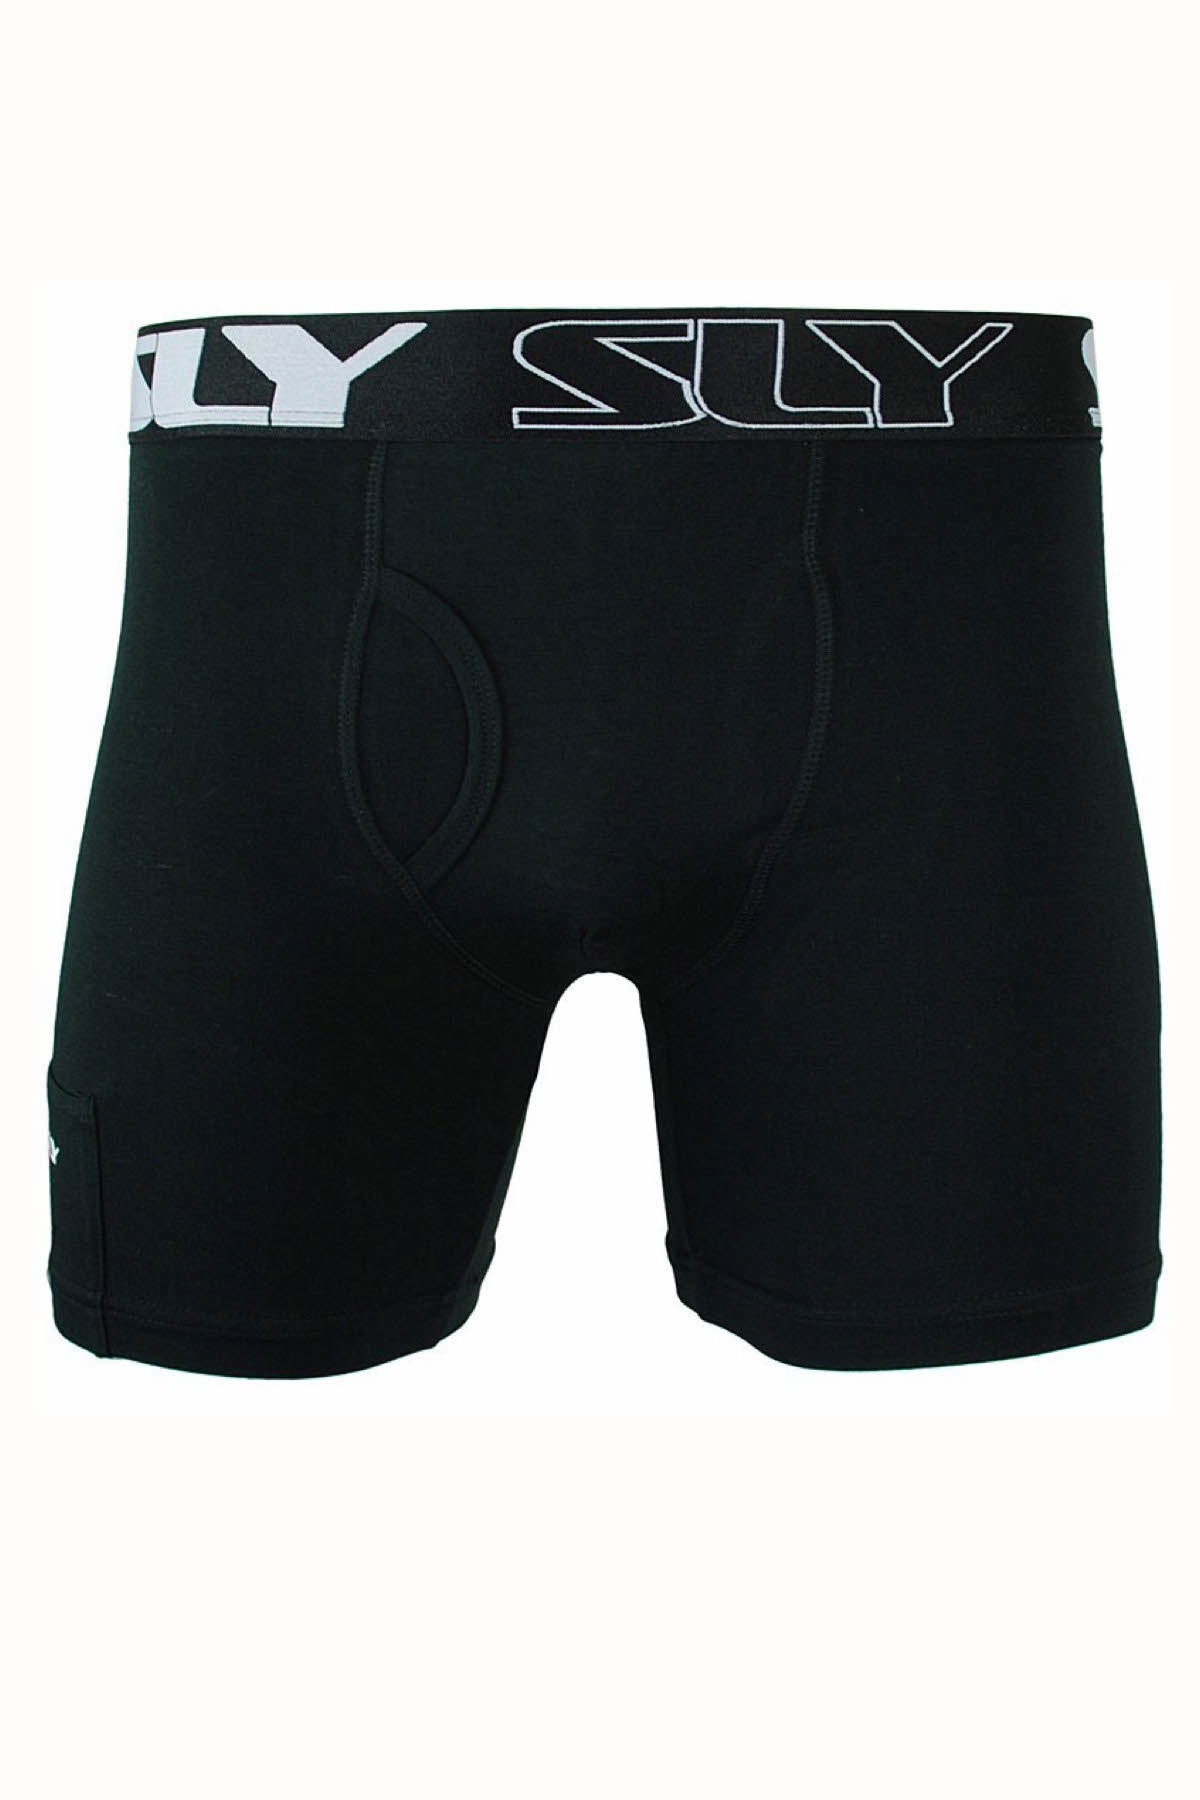 Sly Black Solid Boxer Brief - Long